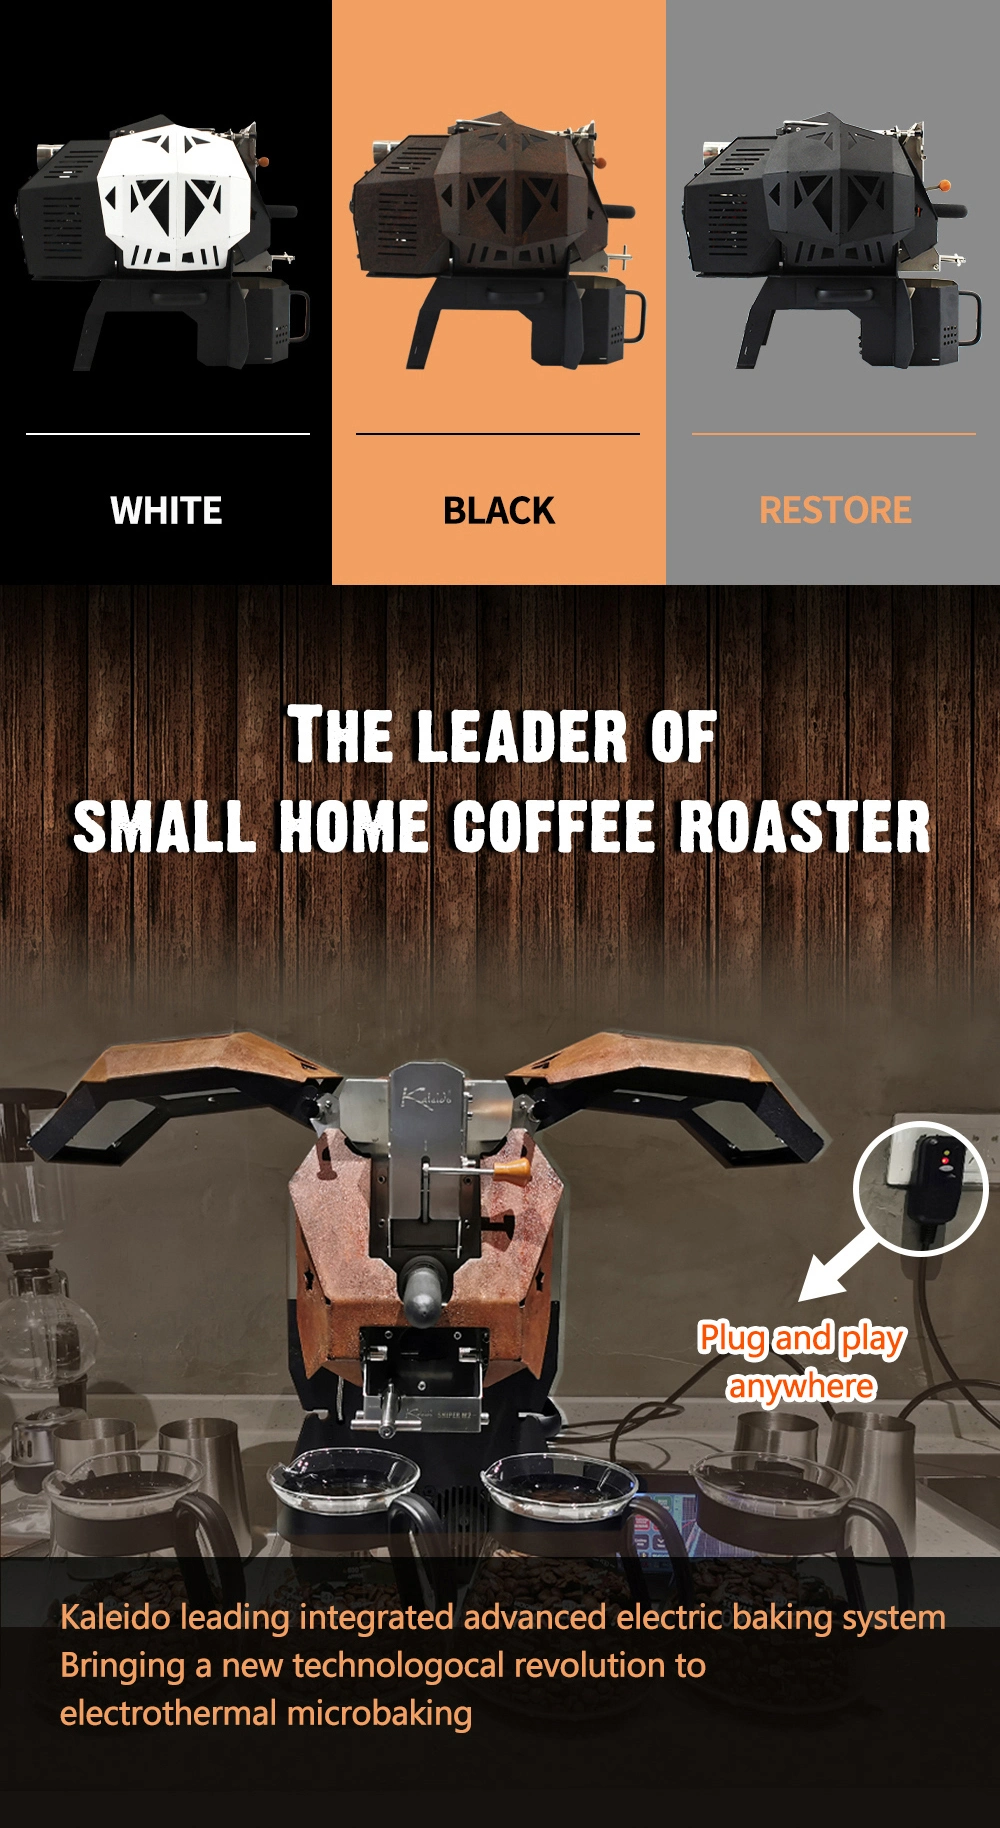 2021 New Design Fashion 3.2kg Beans Roasting Home Use Roaster Coffee Machine Price